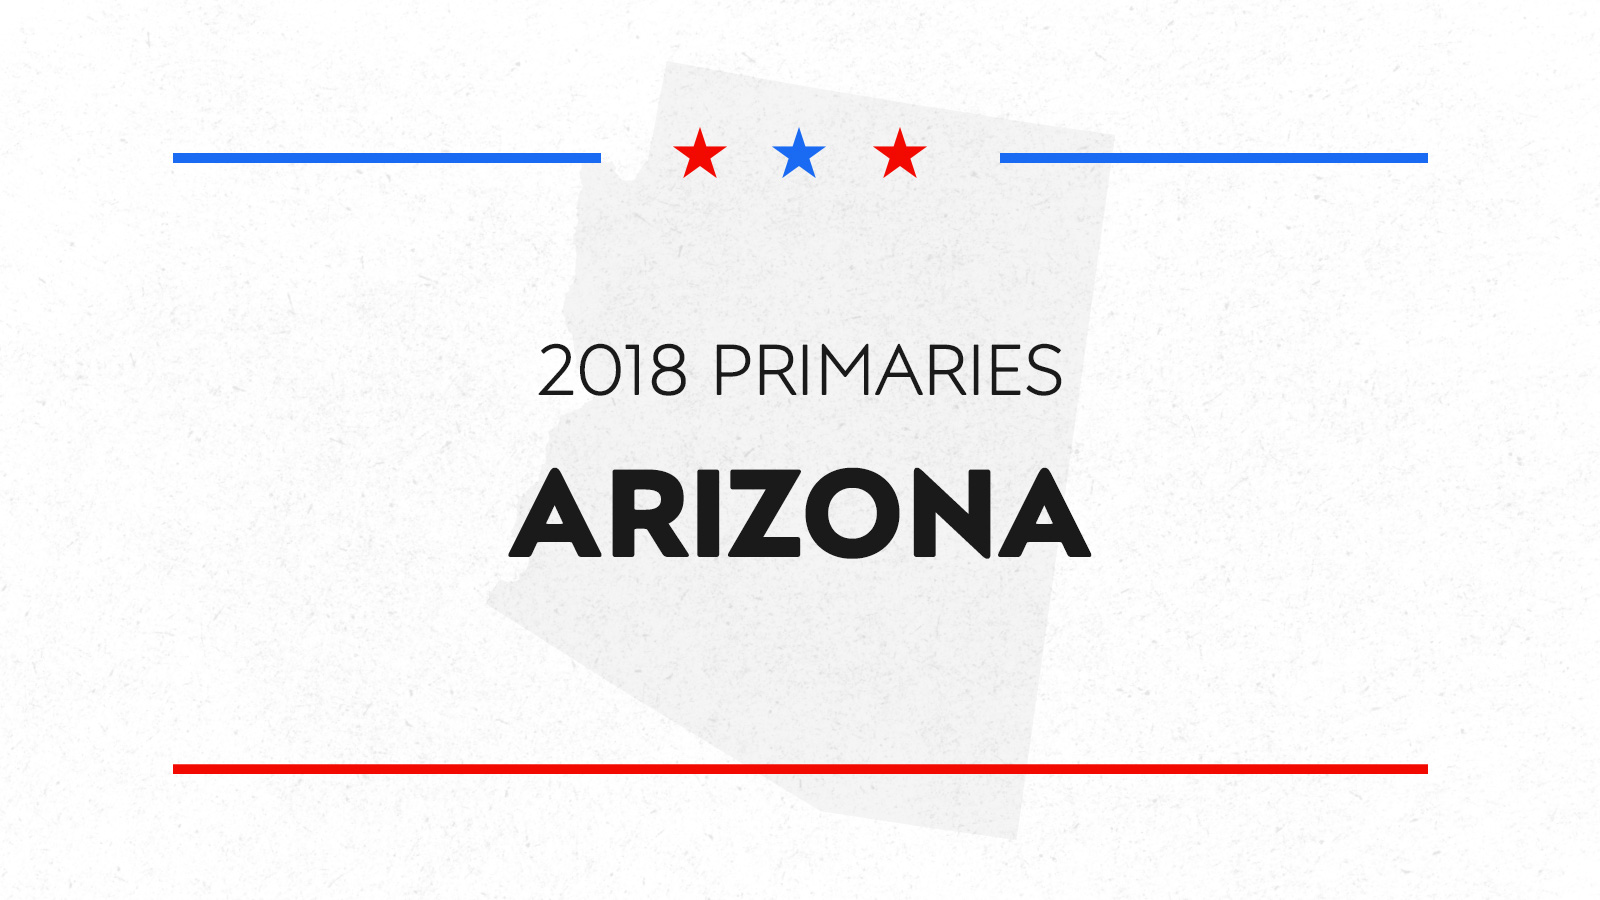 Arizona primary results